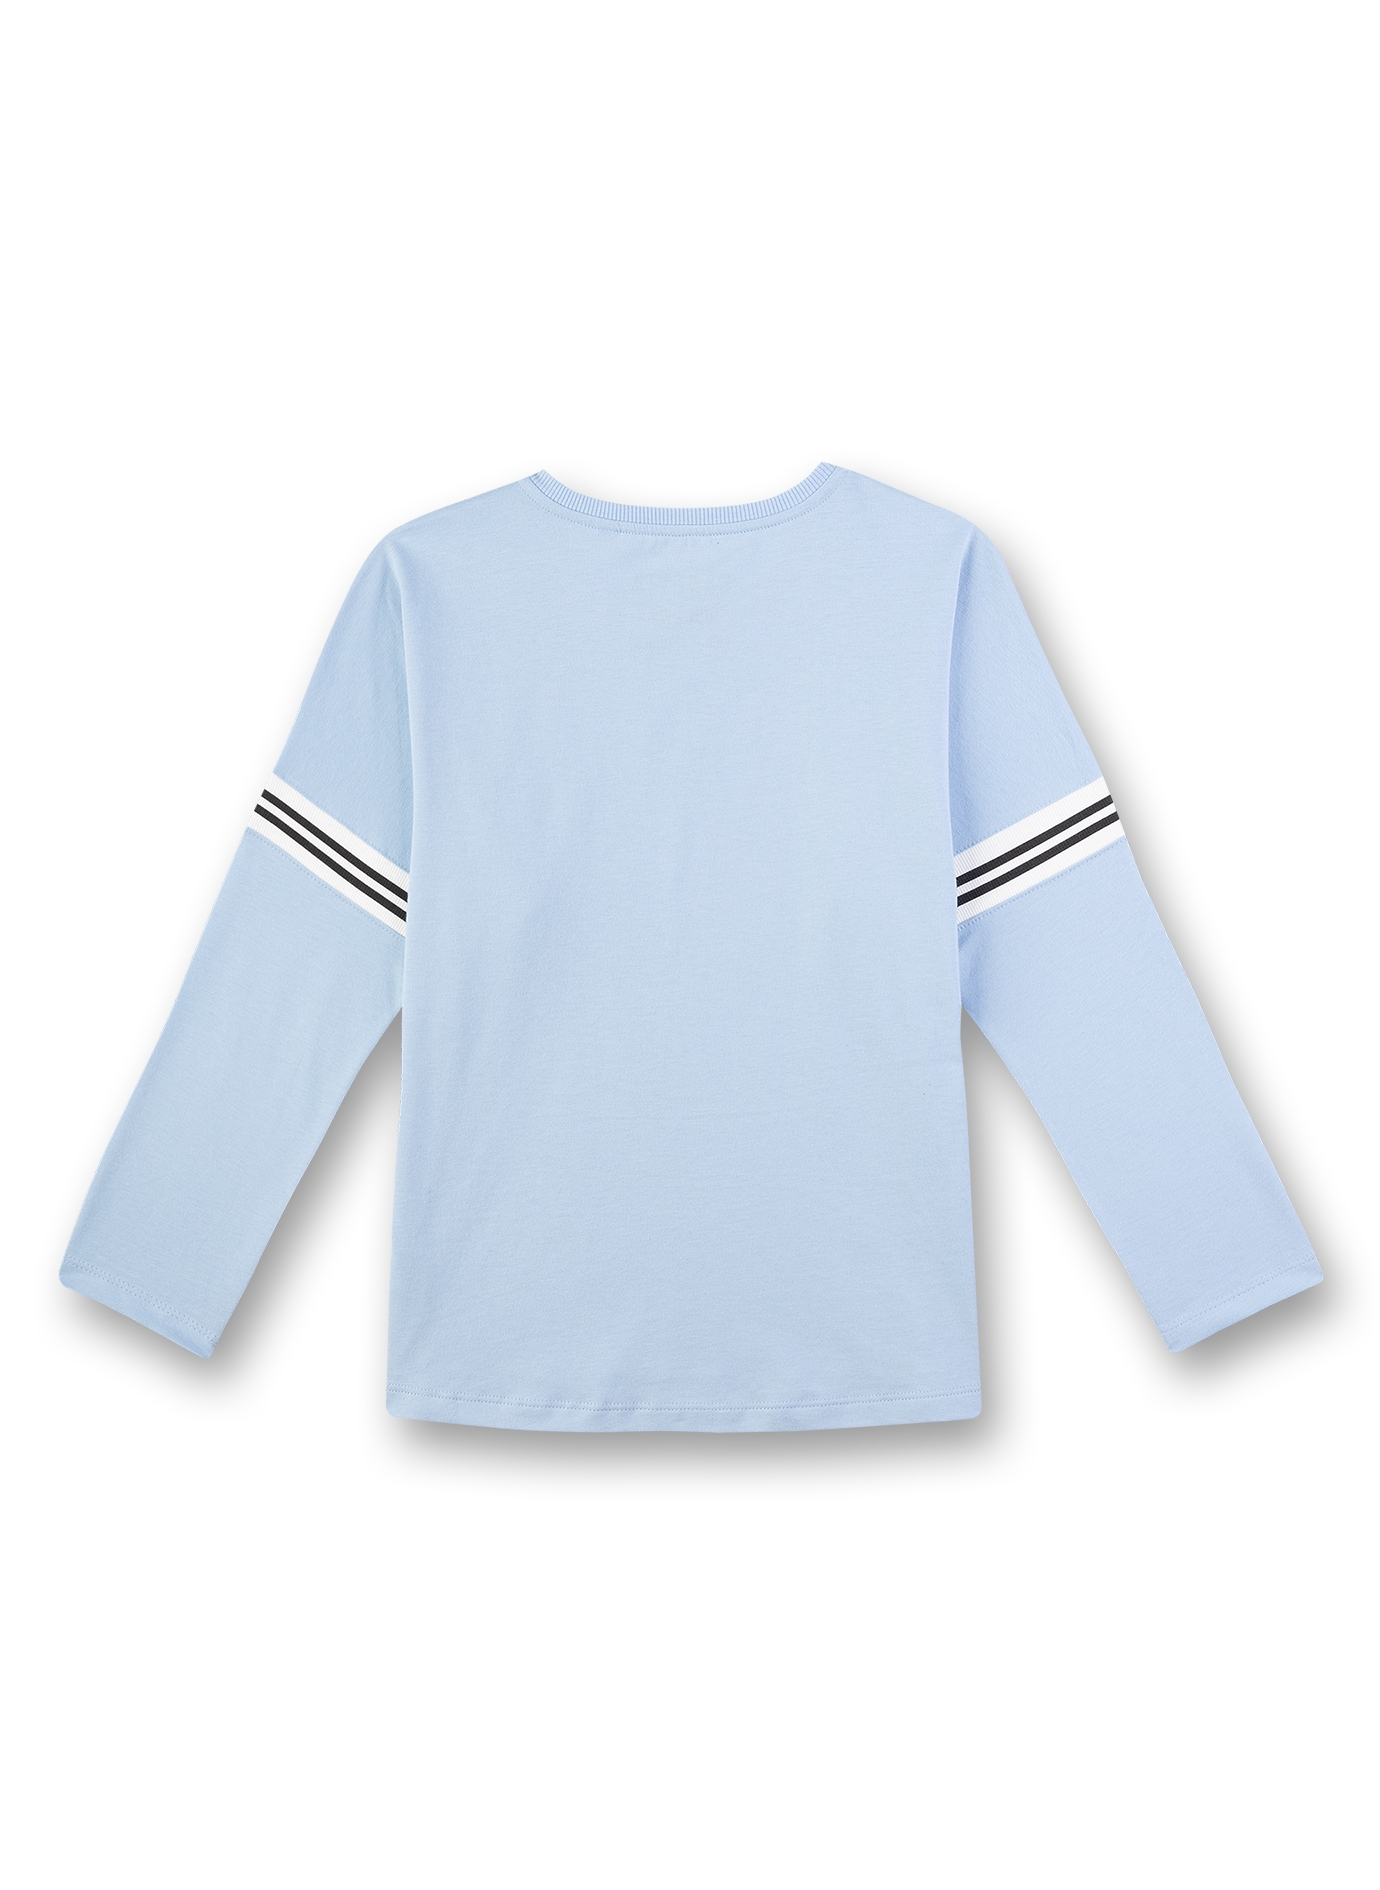 Mädchen-Shirt langarm Hellblau Athleisure